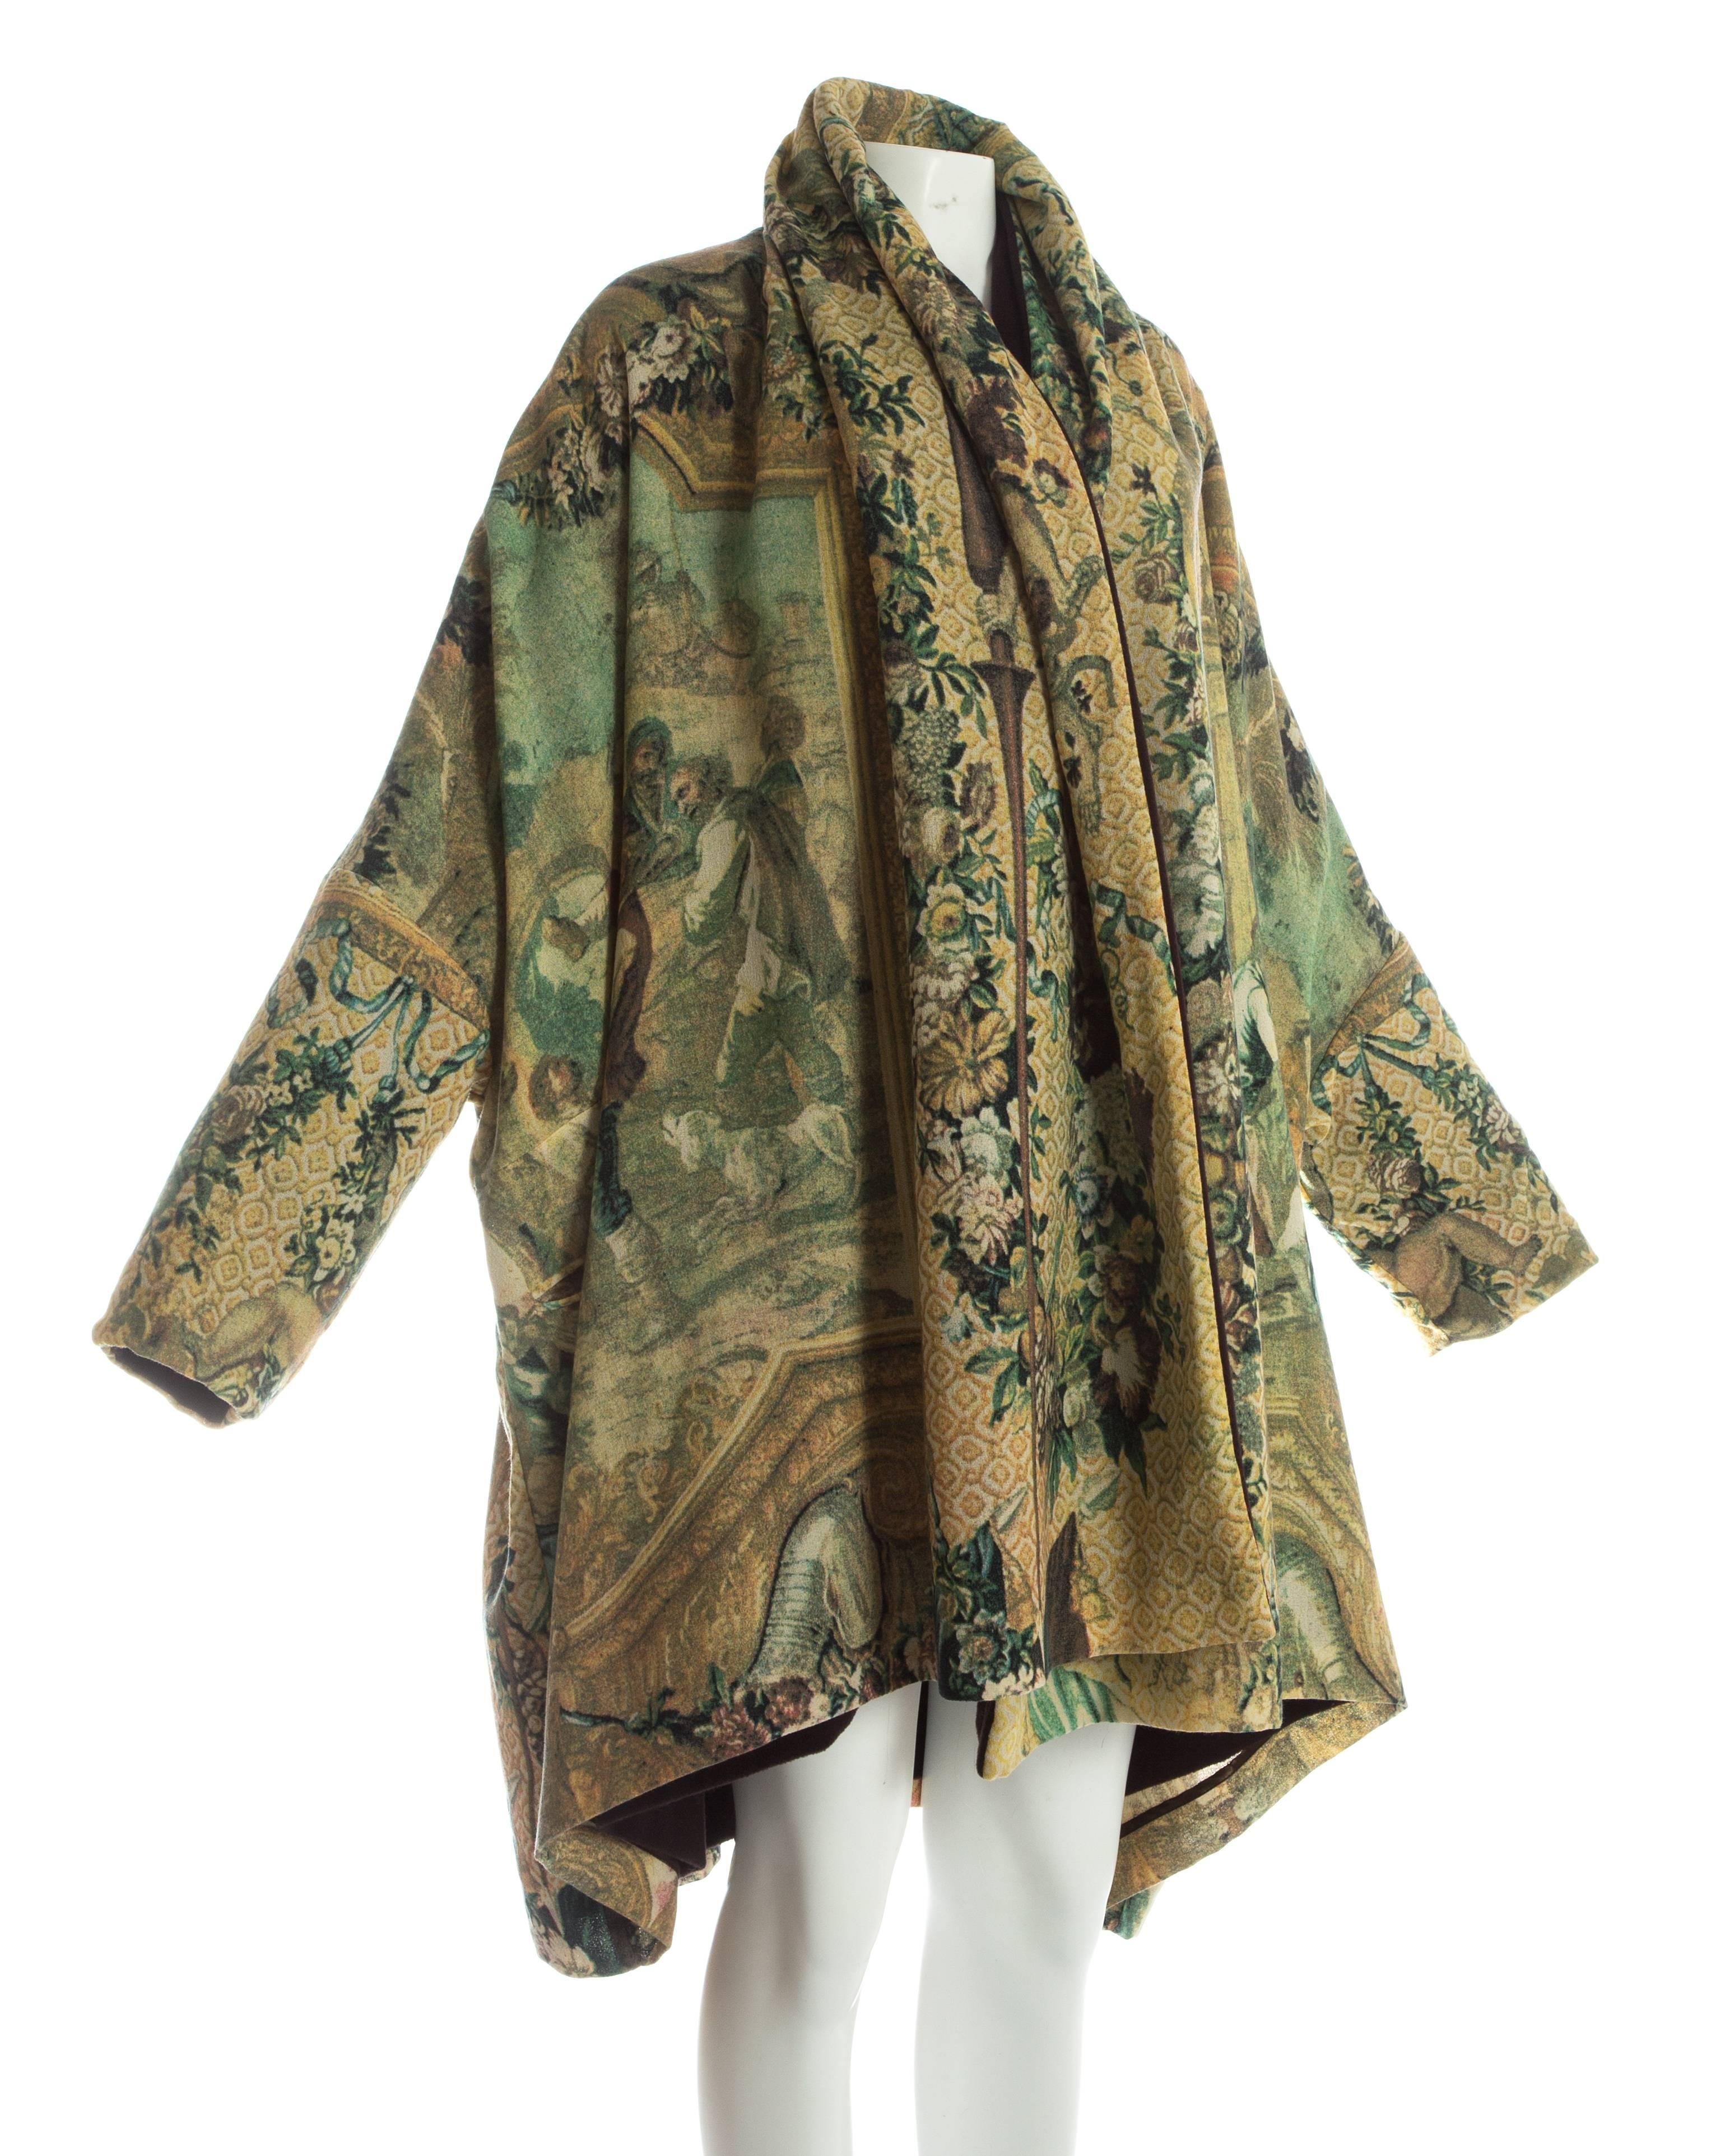 Brown Dolce & Gabbana wool crepe reversible blanket coat, c. 1989-90